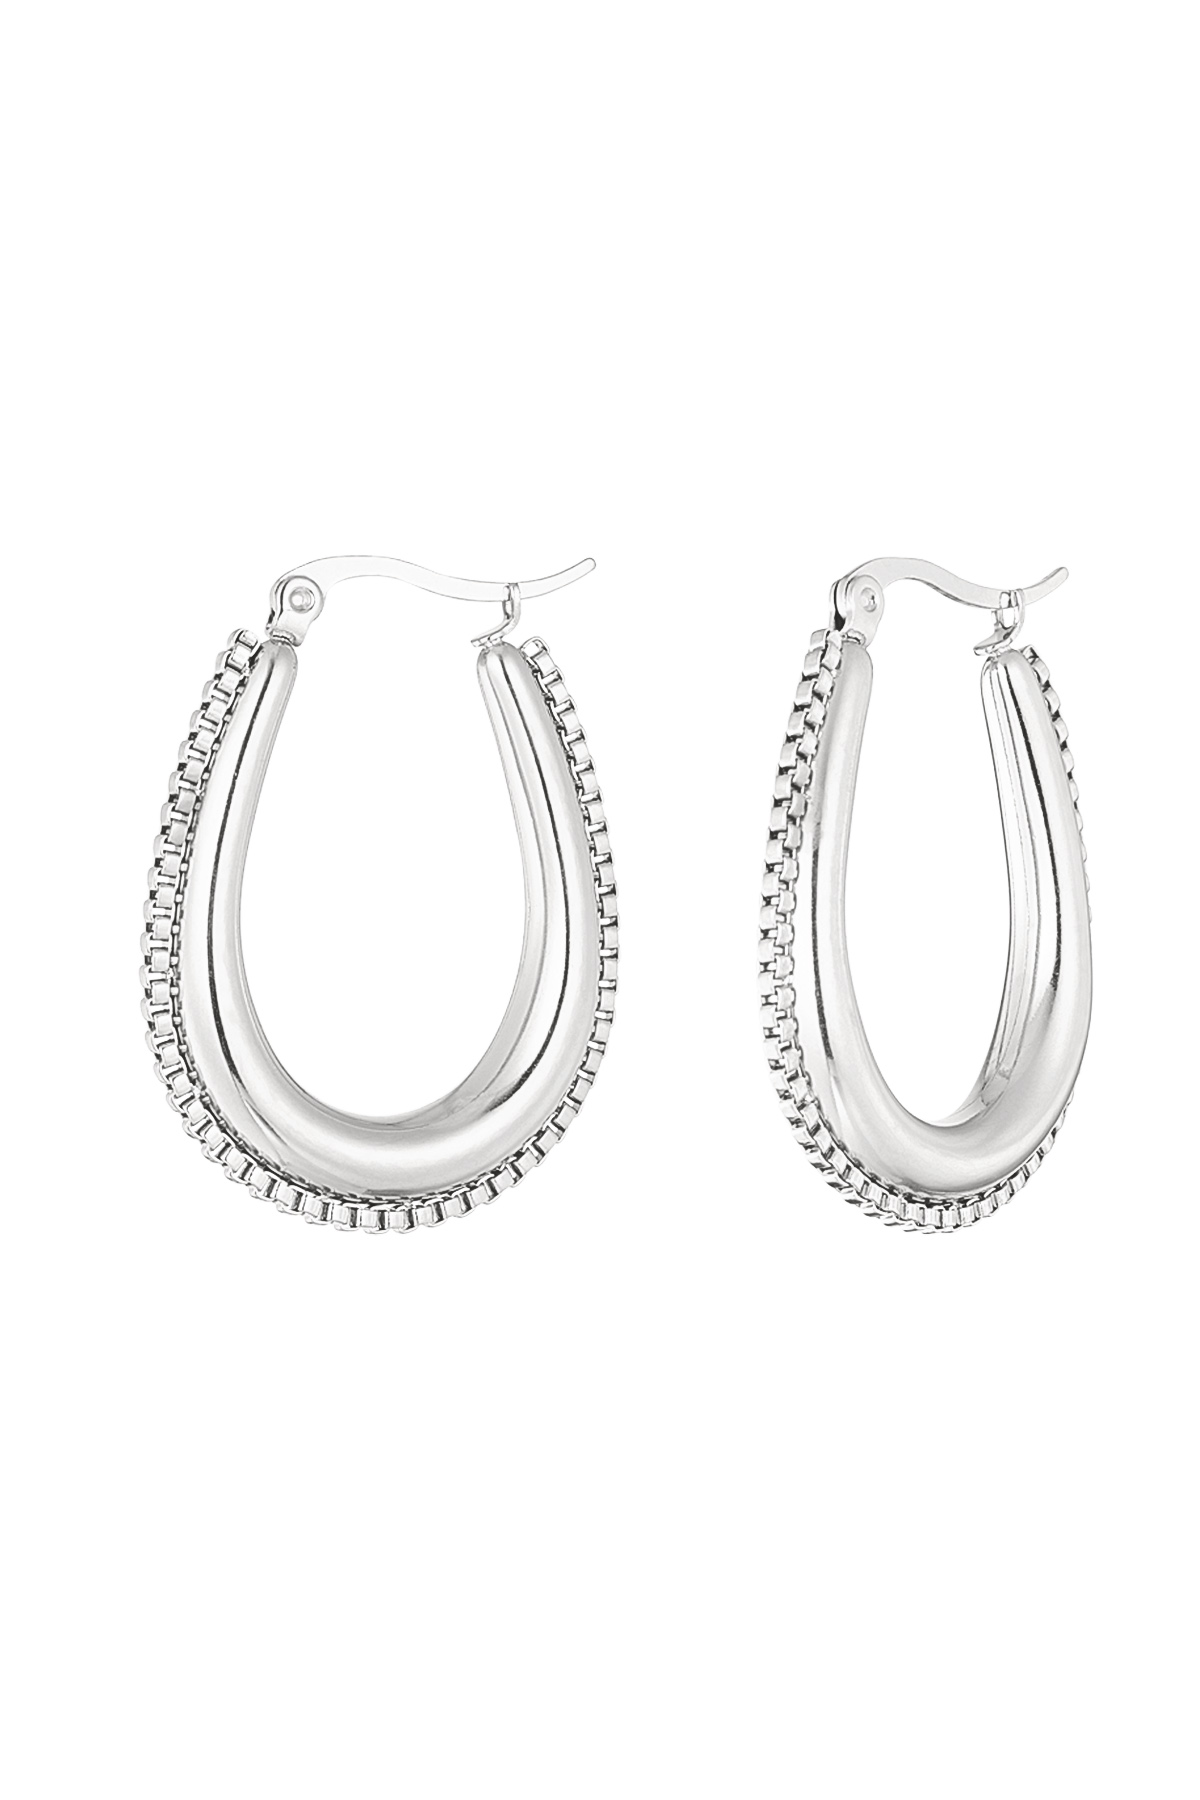 Tropfenförmiger Ohrring mit Gliedern – Silber